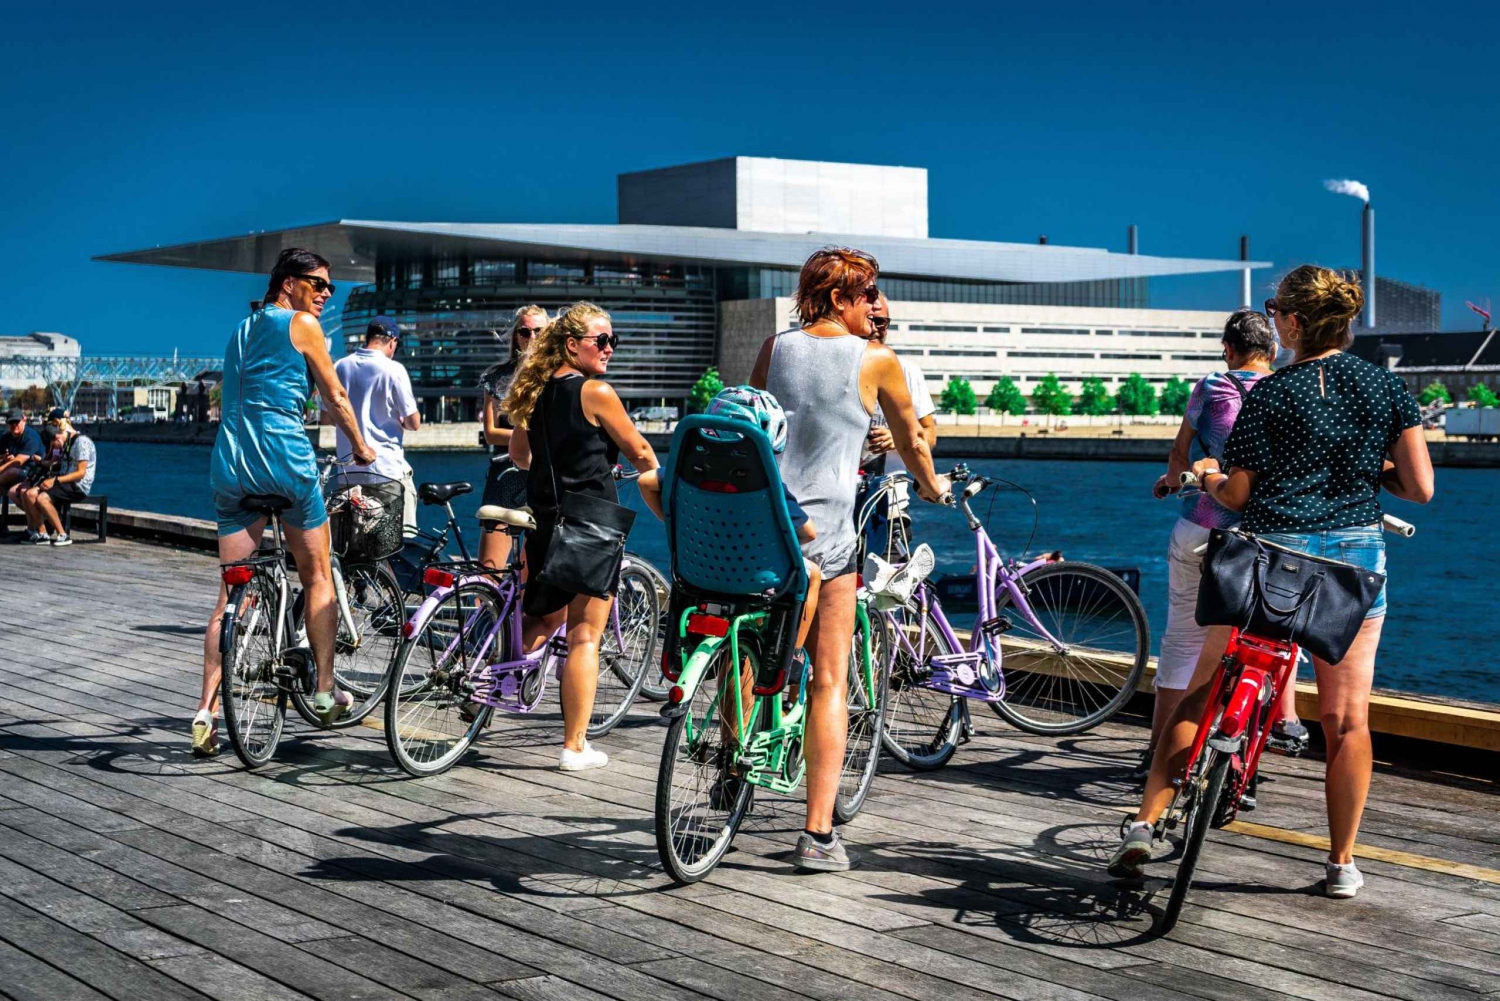 Kööpenhamina: Complete City by Bike Tour